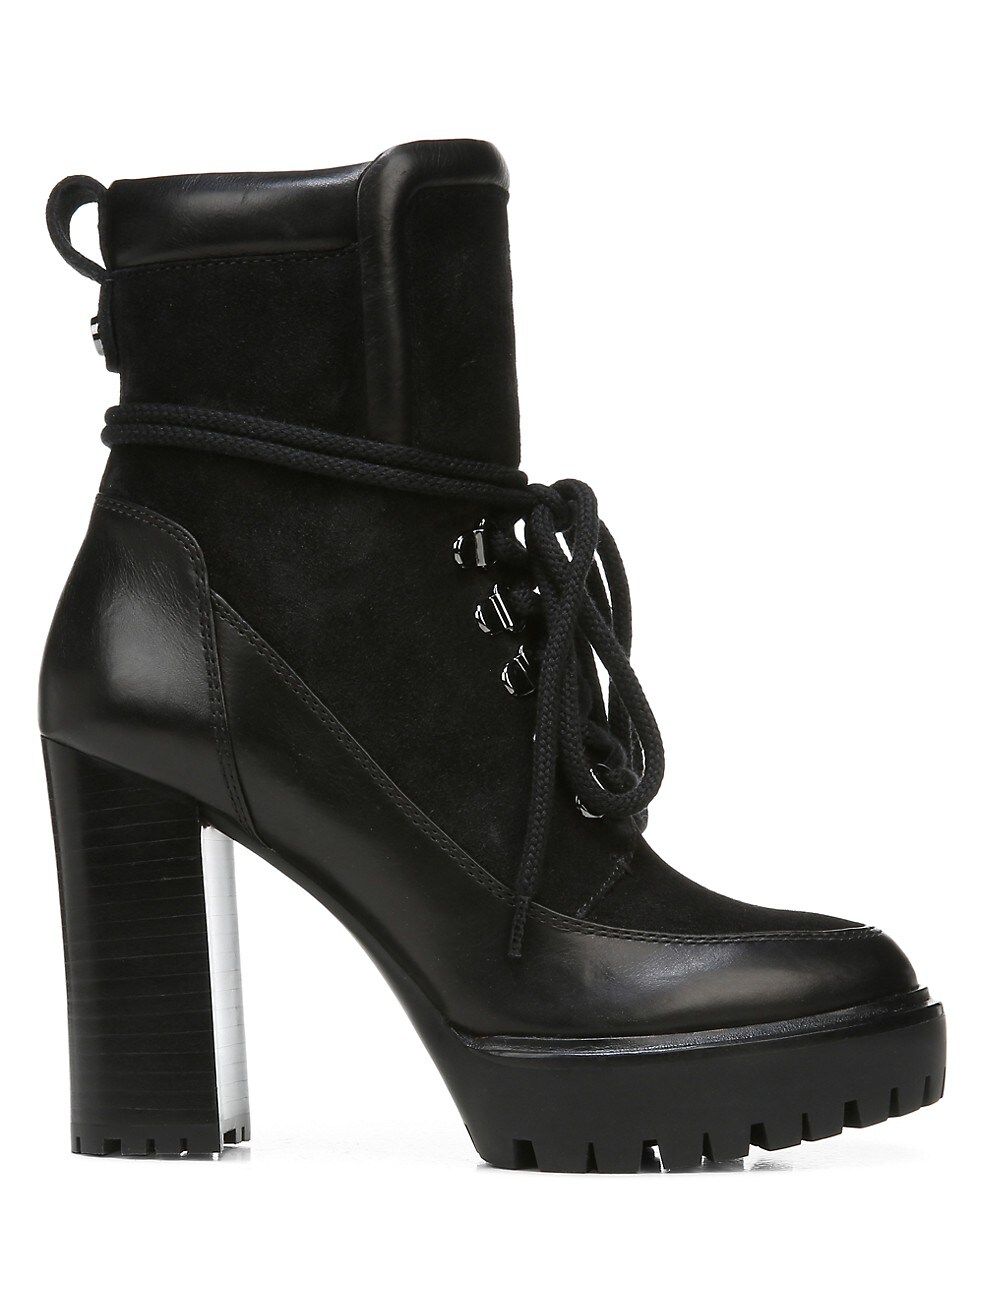 Veronica Beard Hasia Black Leather Platform Booties | Saks Fifth Avenue